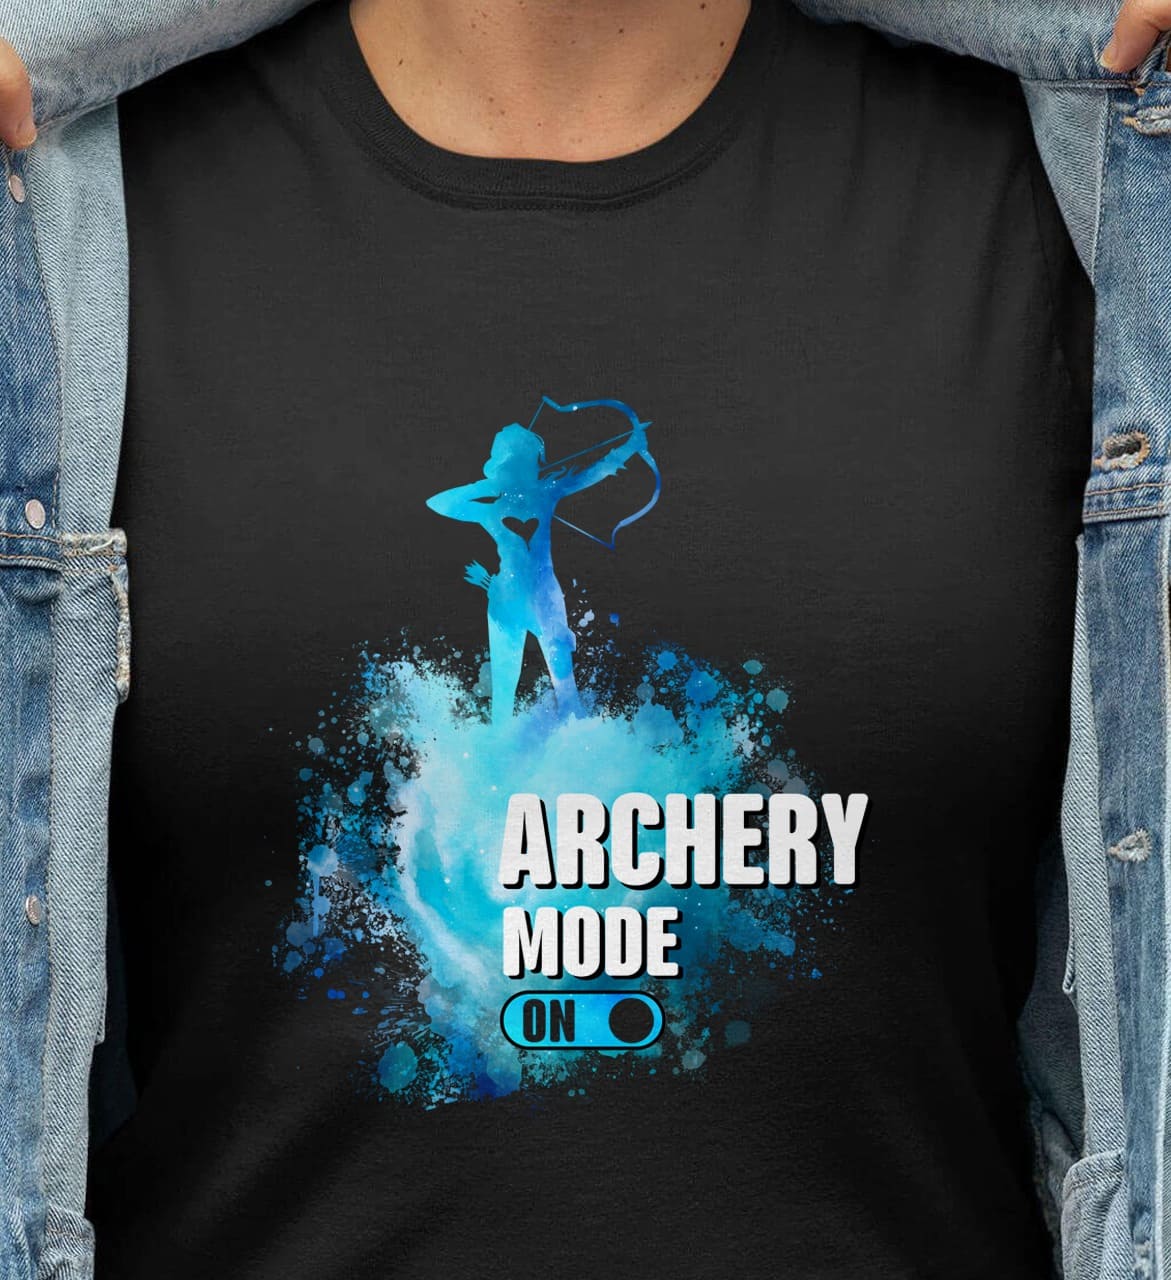 Archery mode on - T-shirt for archer, girl loves archery